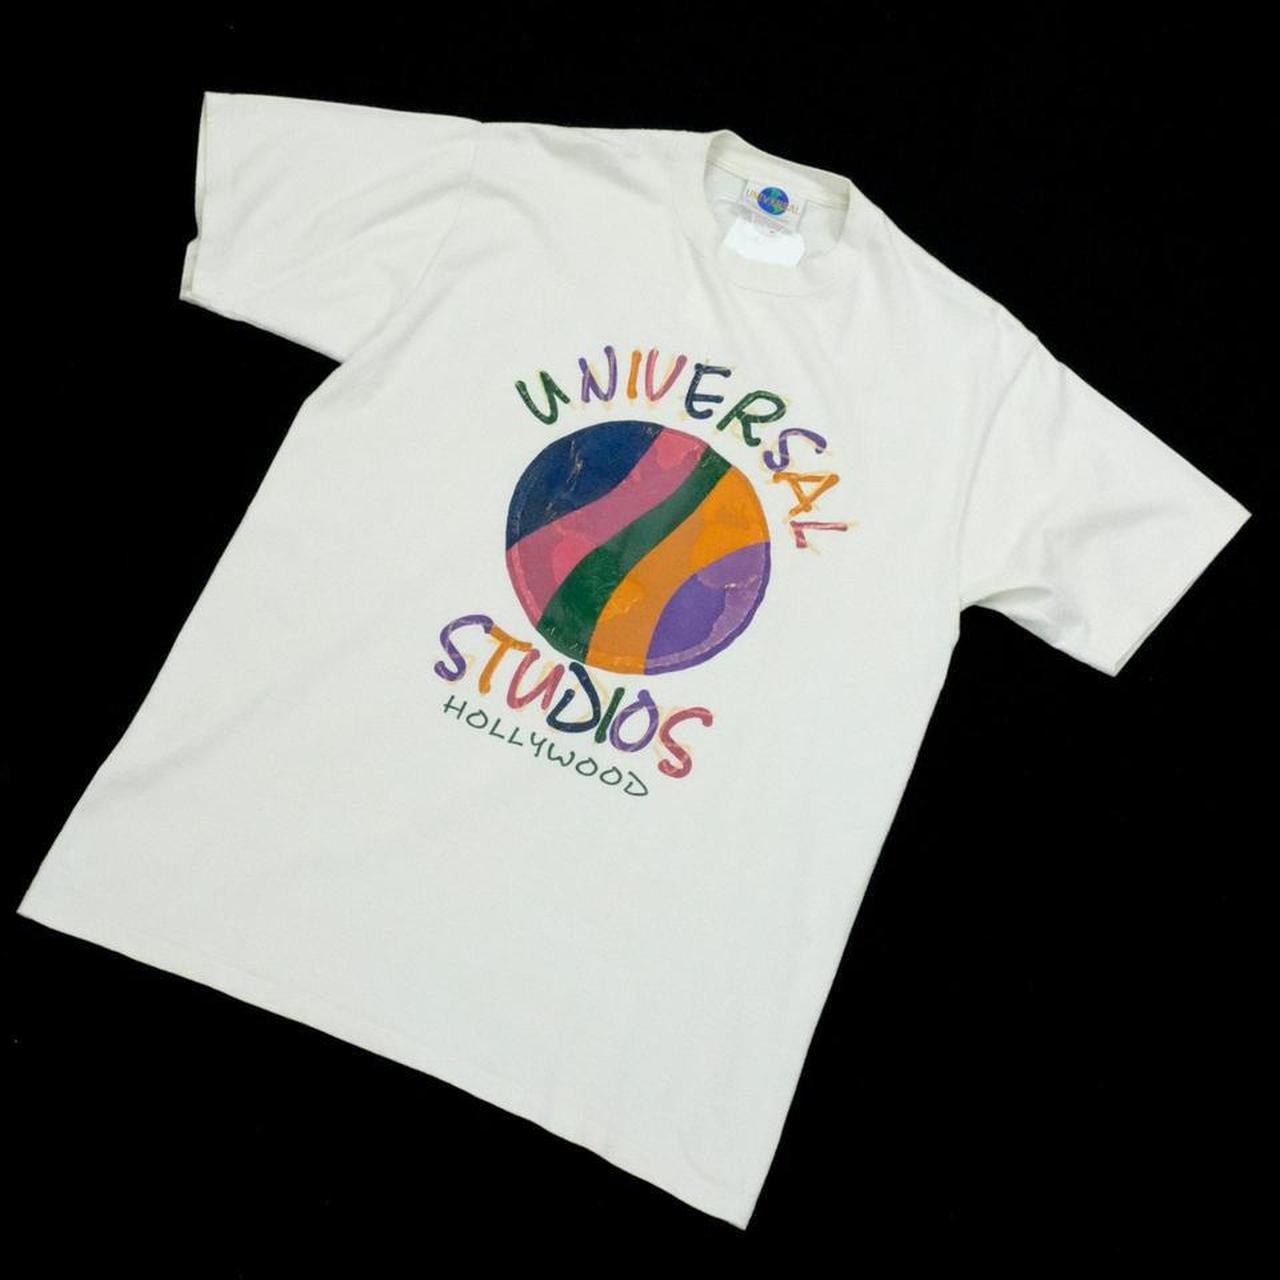 Universal Studios T-shirt